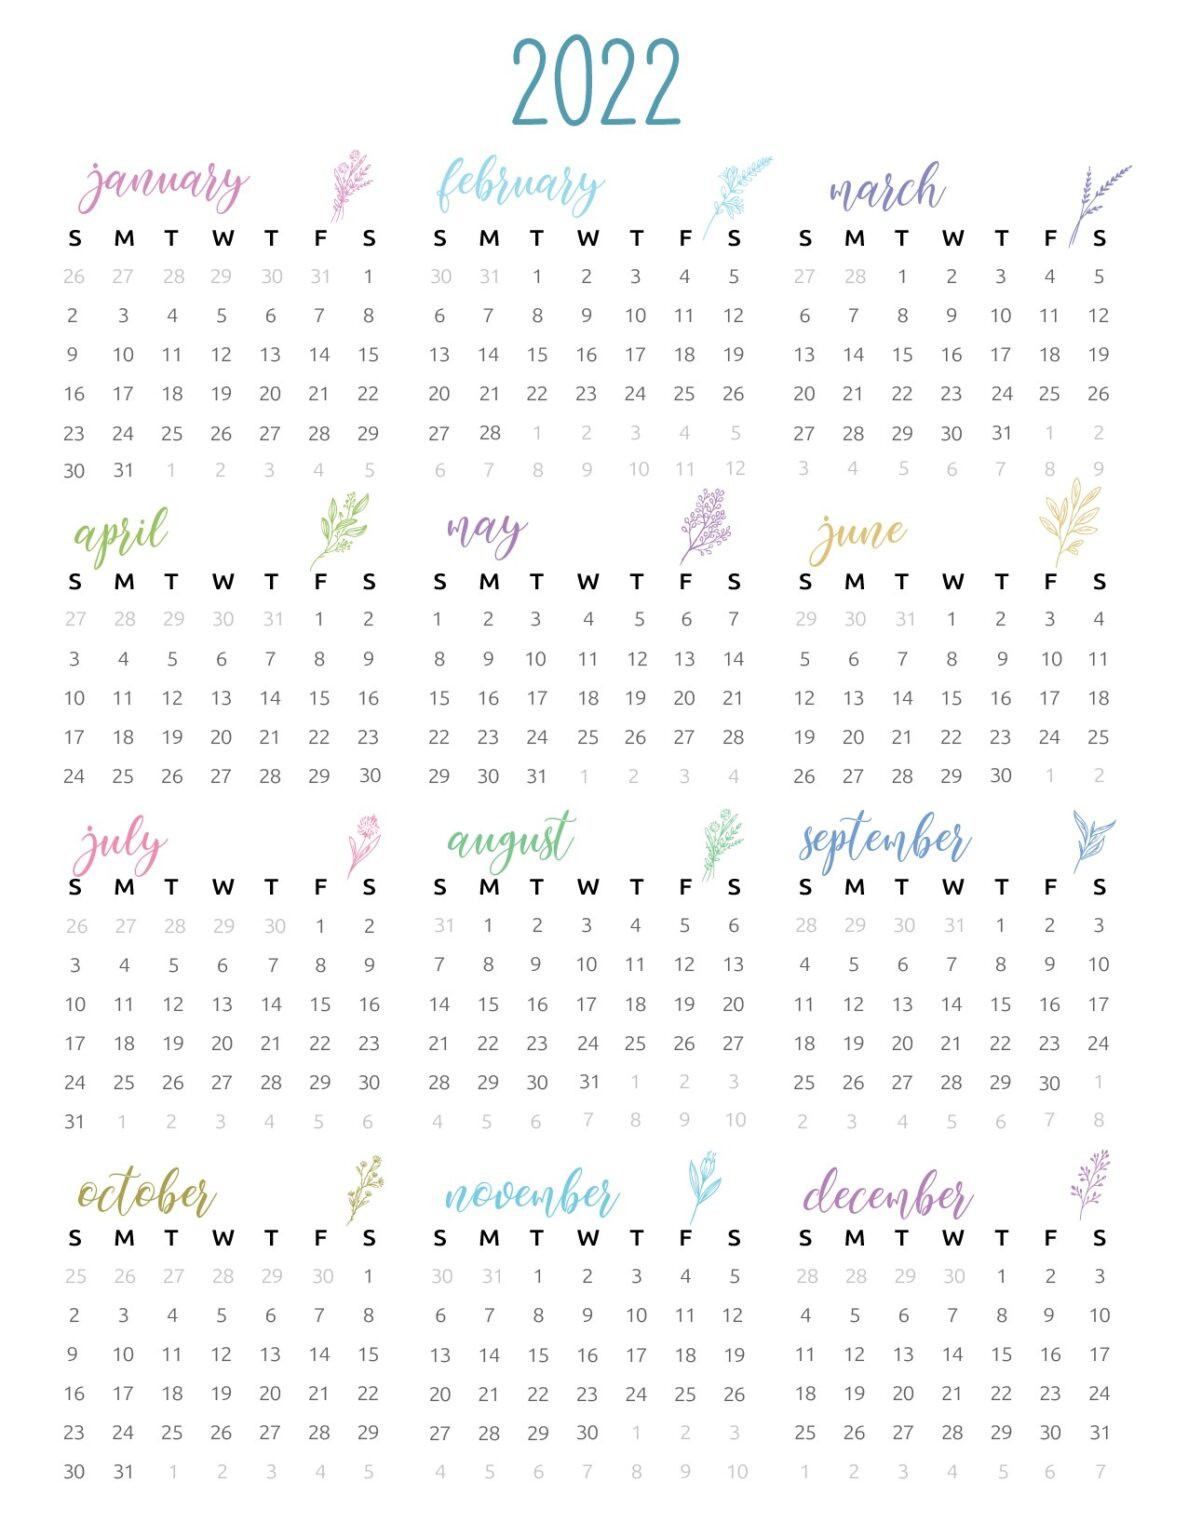 2022 Yearly Calendar Printable - World Of Printables  Free Printable Calendar 2022.Com